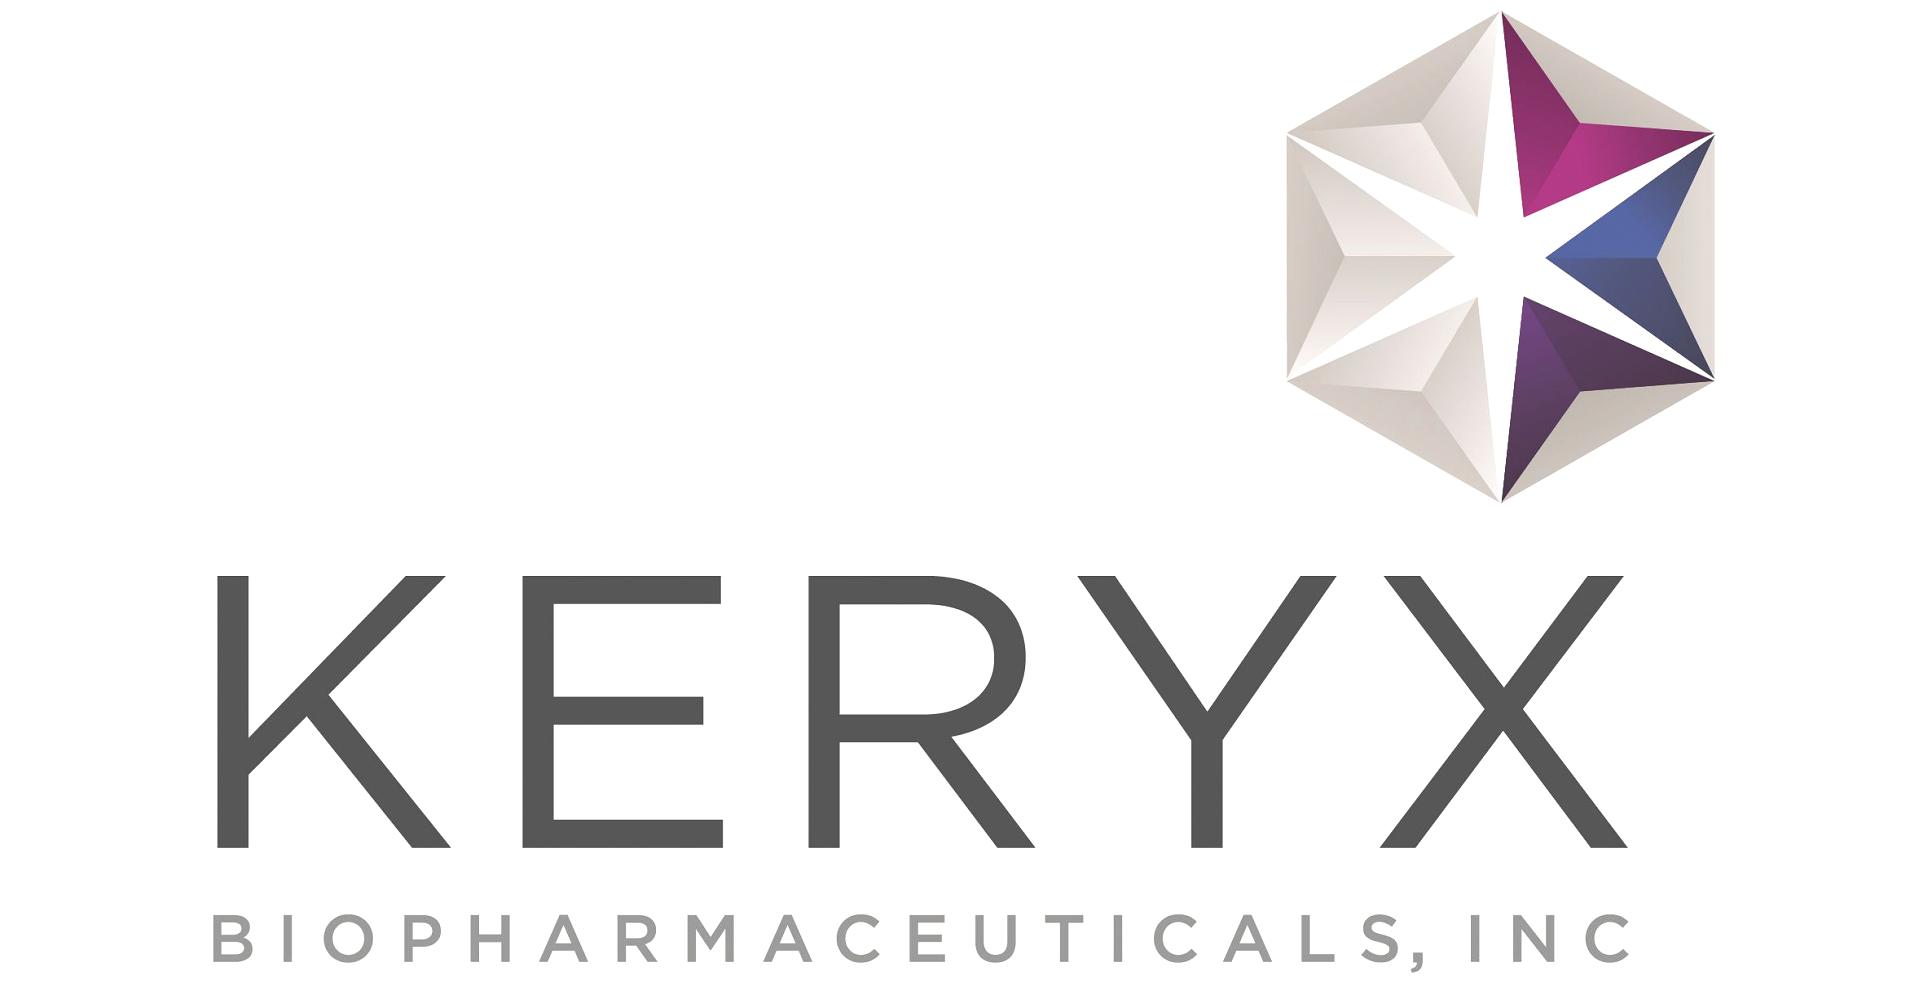 sacl_kerx_keryx_biopharmaceuticals_logo